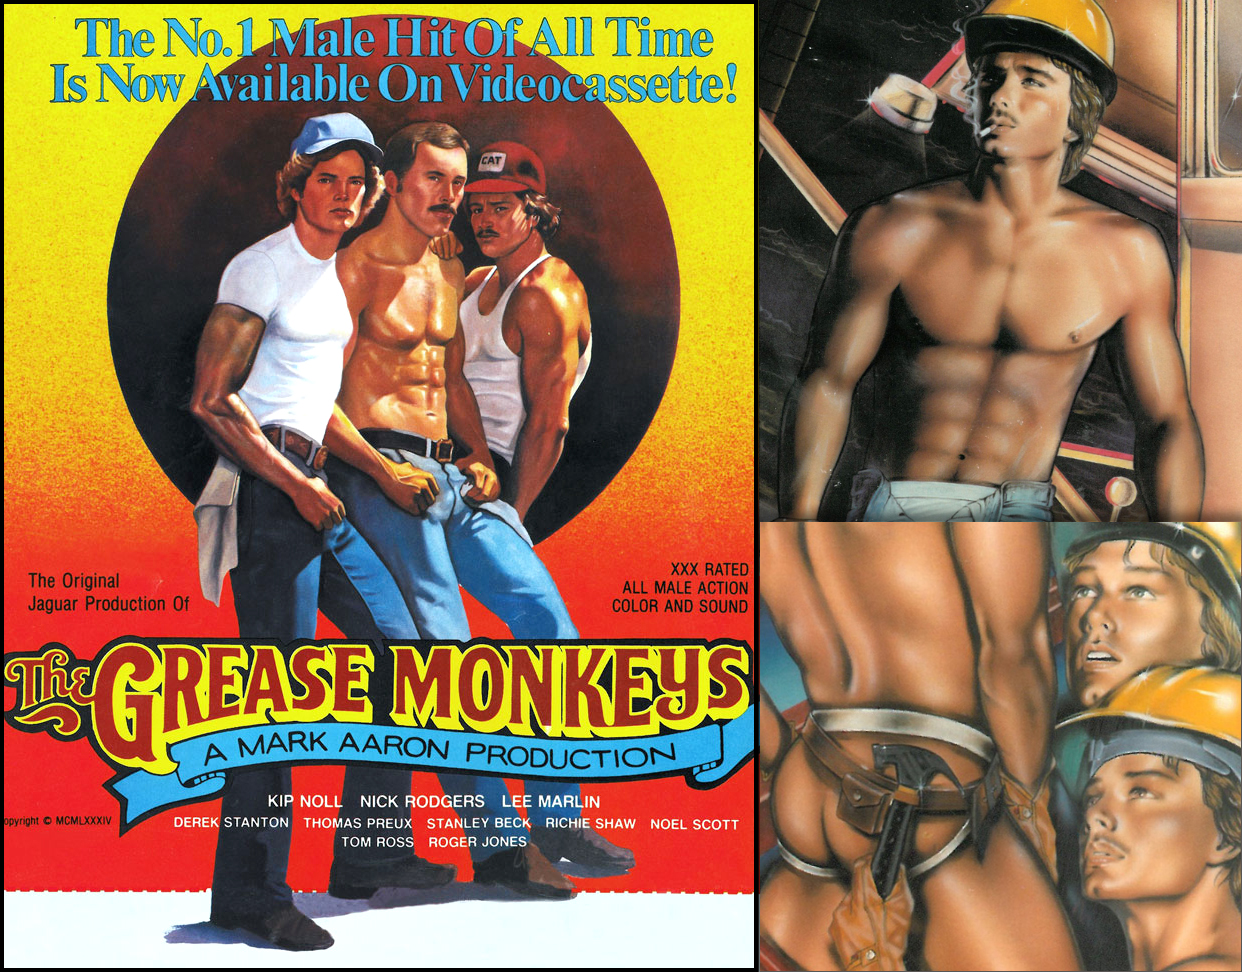 Vintage ads for Grease Monkeys and Hardhat